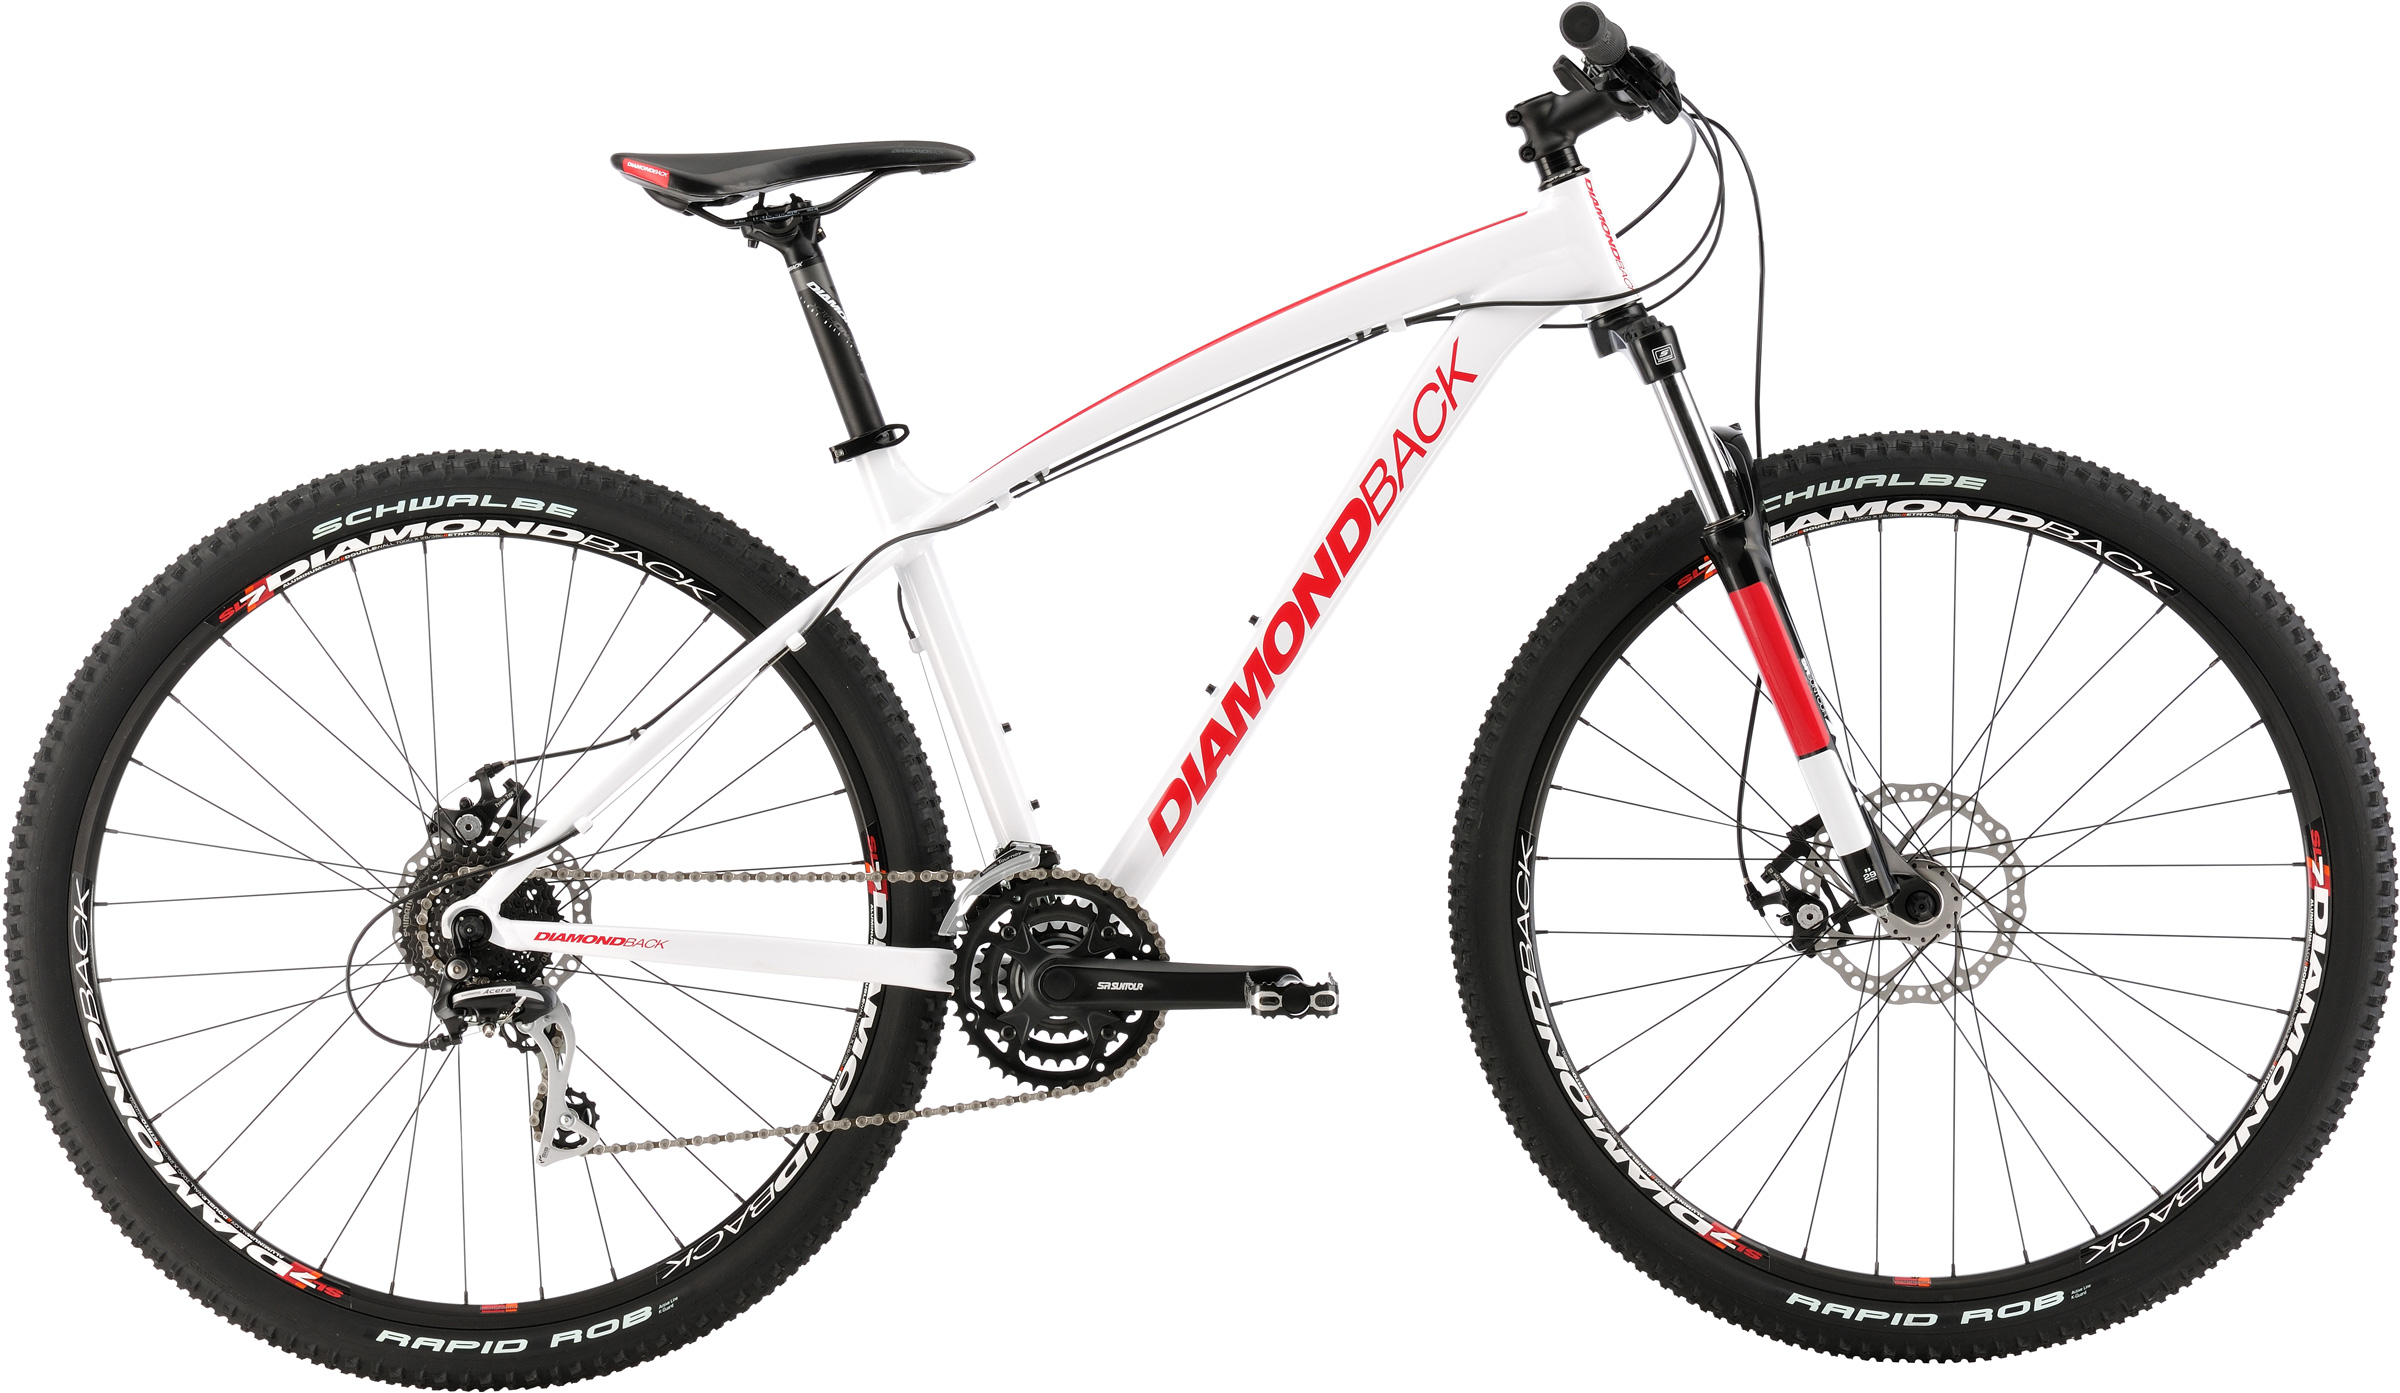 diamondback bicycles overdrive hardtail mountain bike with 275 wheels